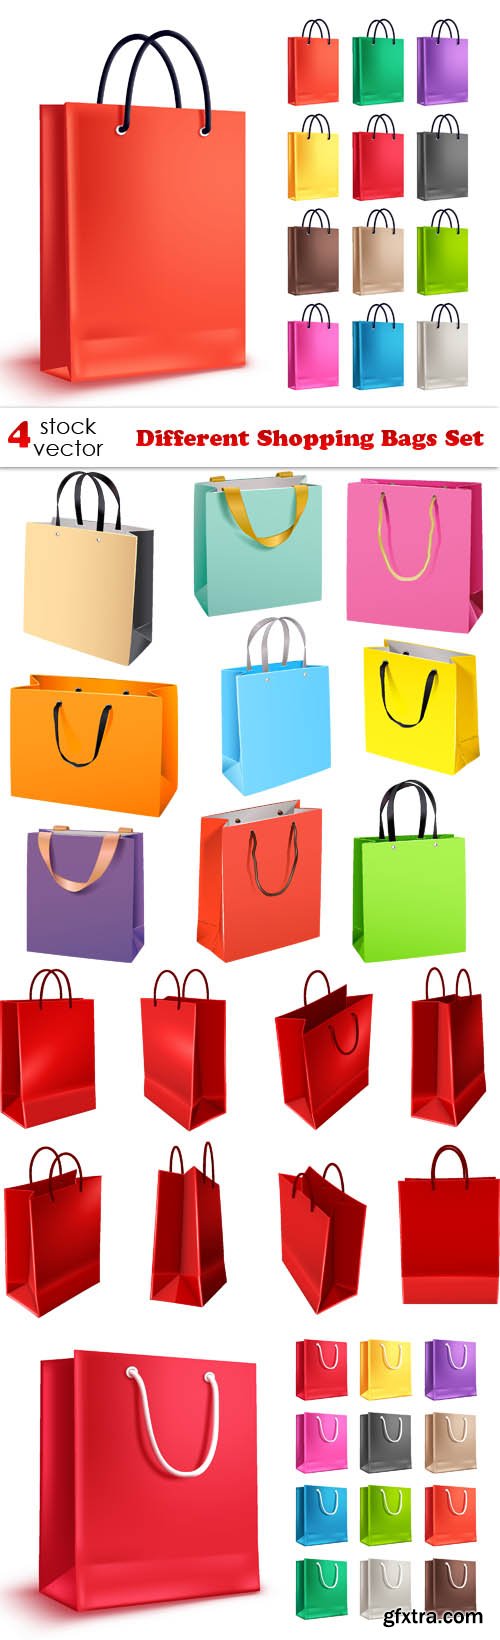 Vectors - Different Shopping Bags Set